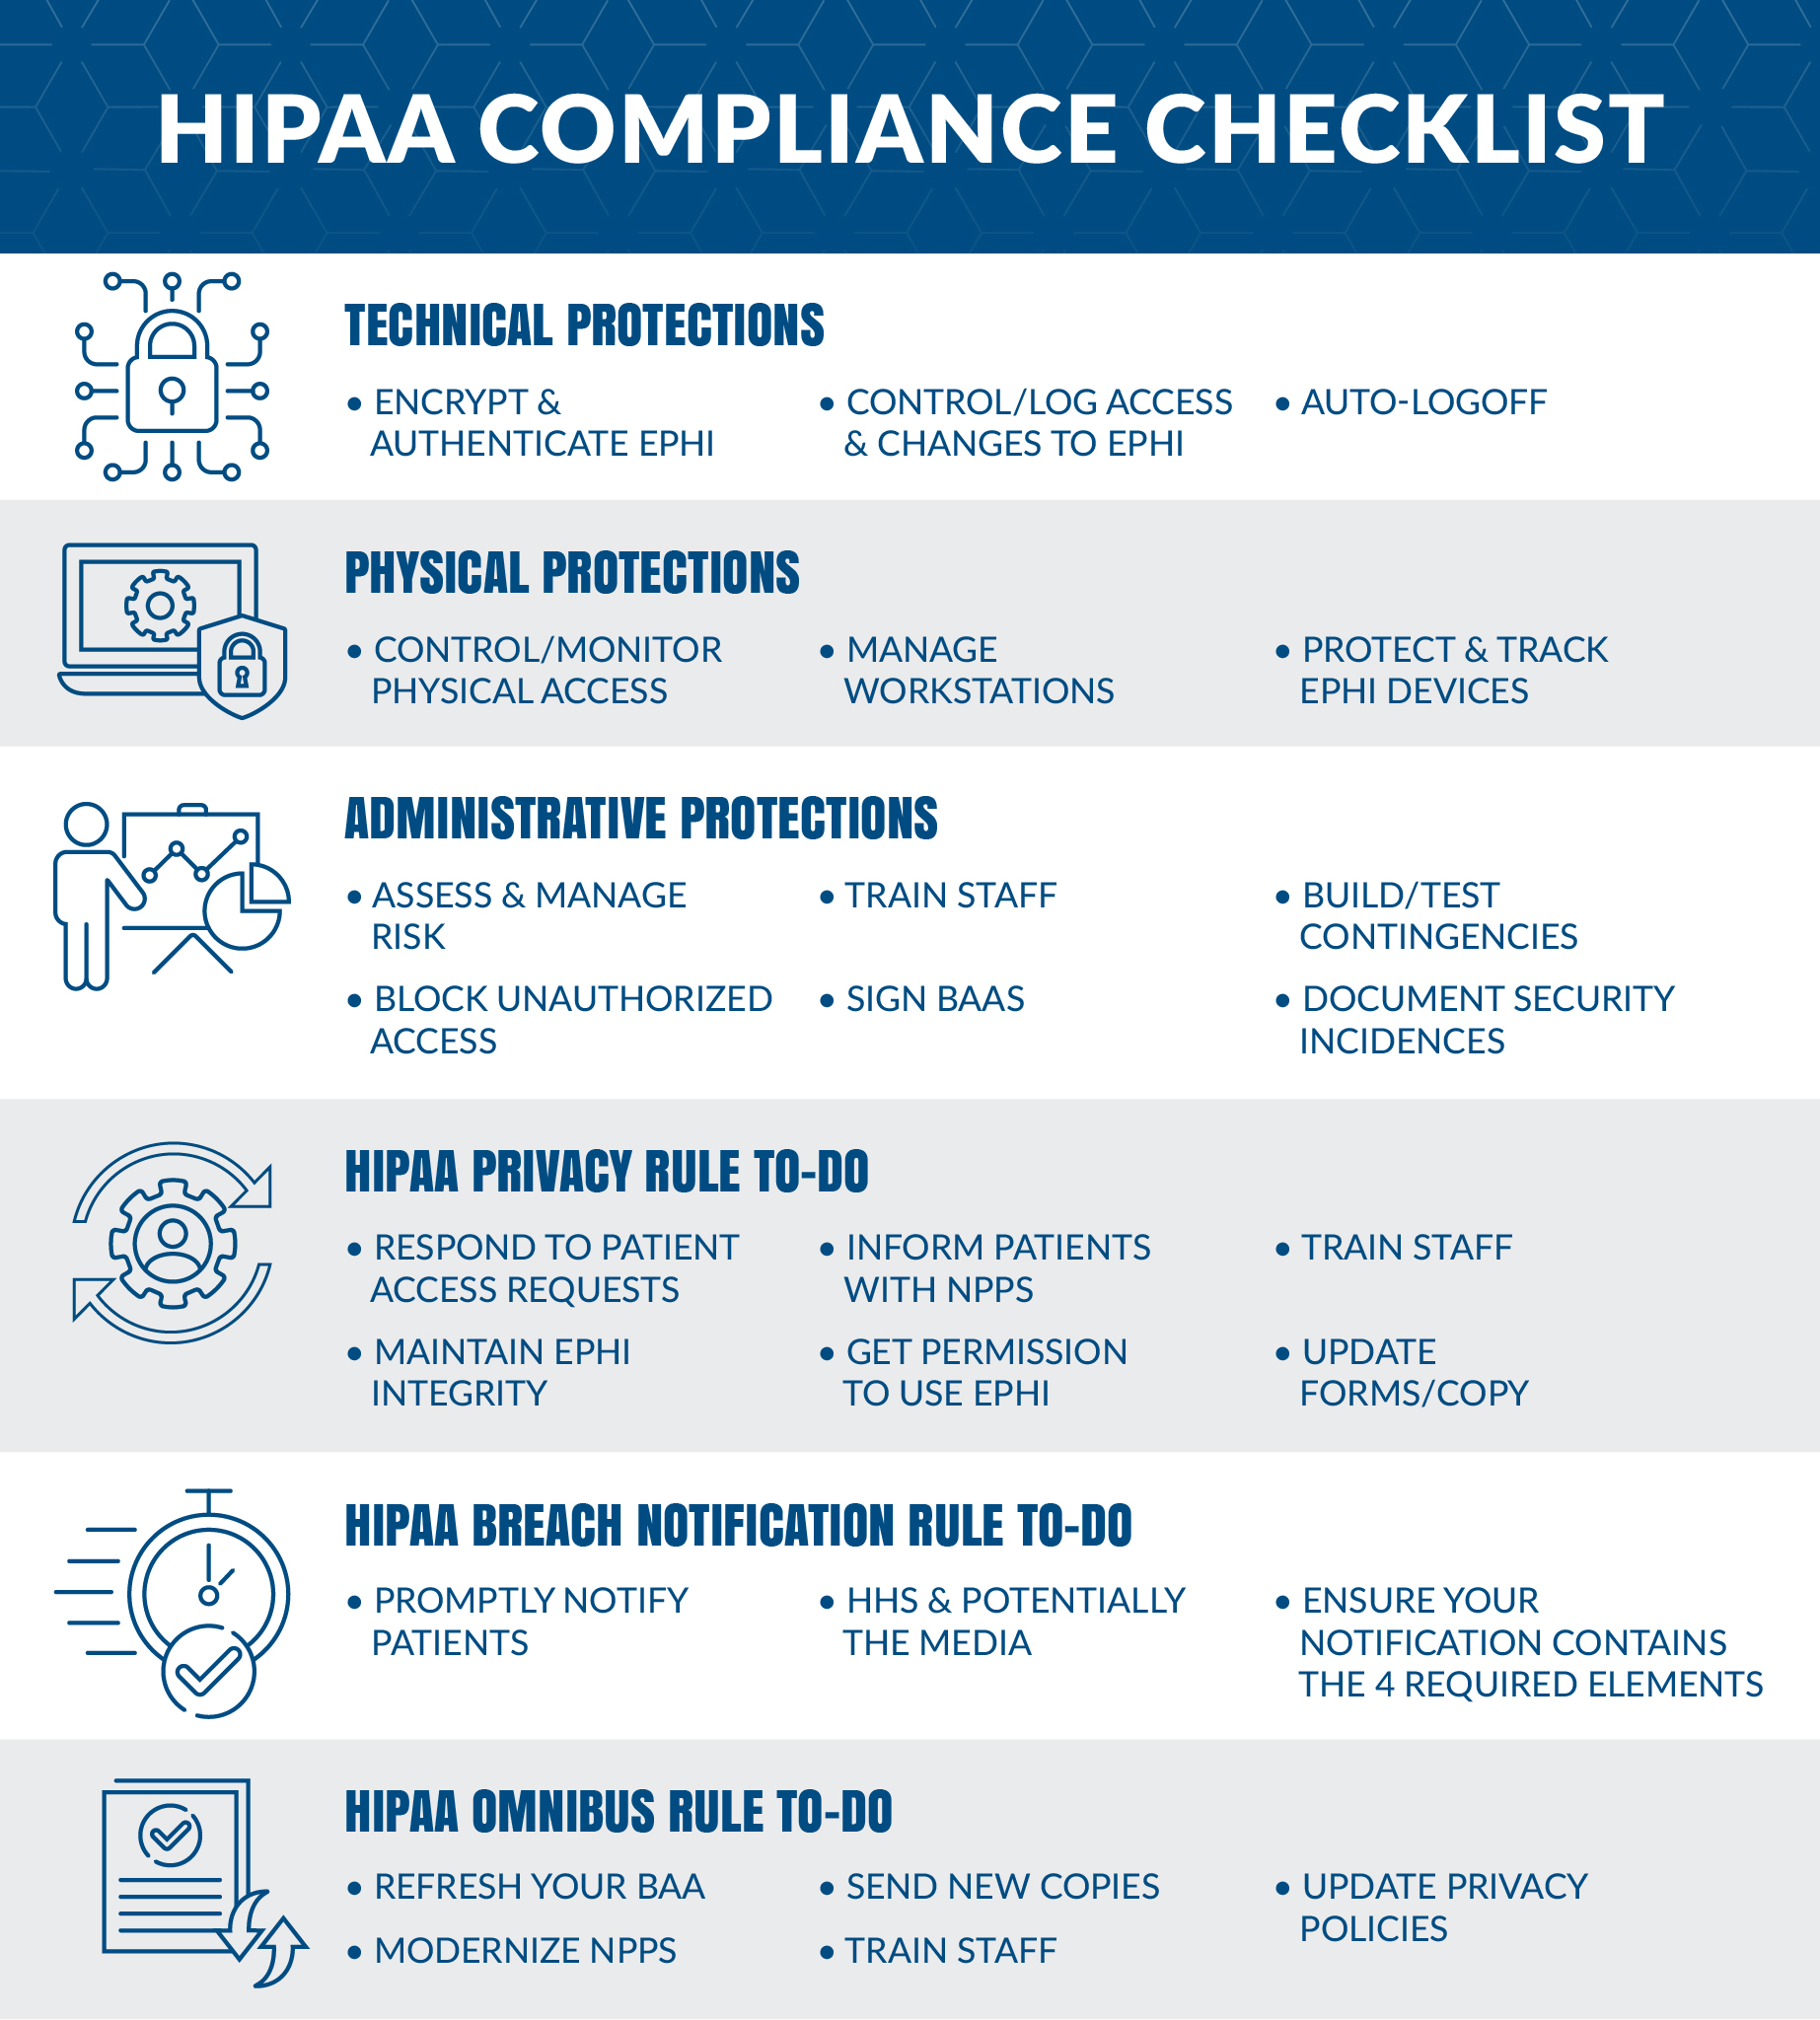 HIPAA Compliance Checklist 2021